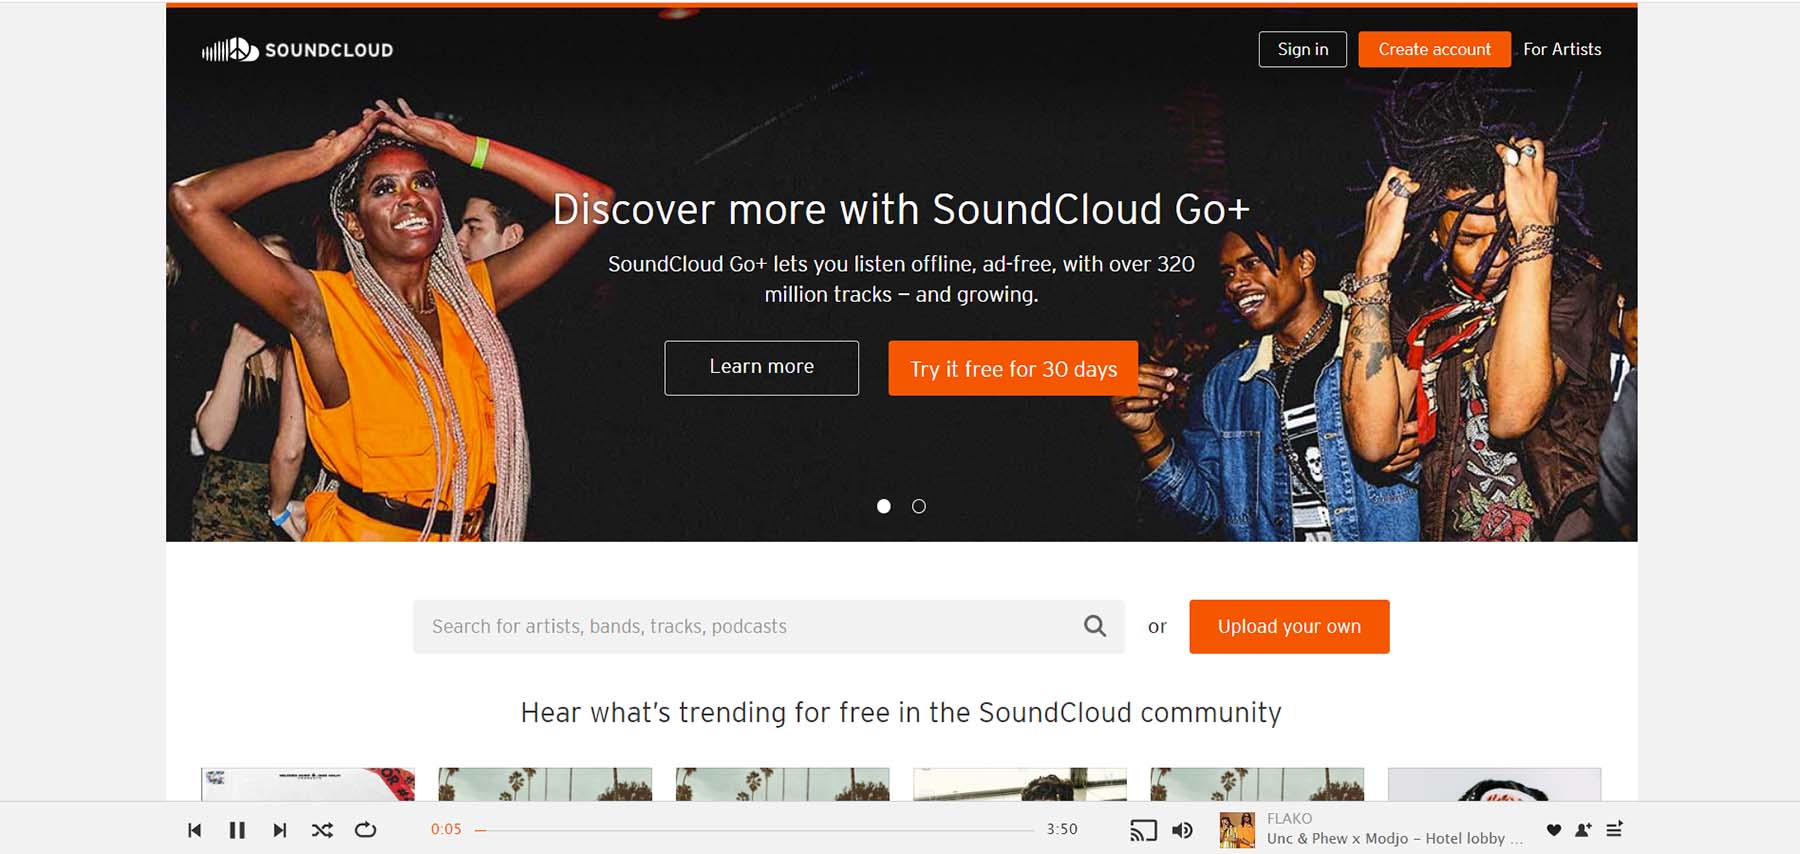 Soundcloud, a podcasting and audio platform